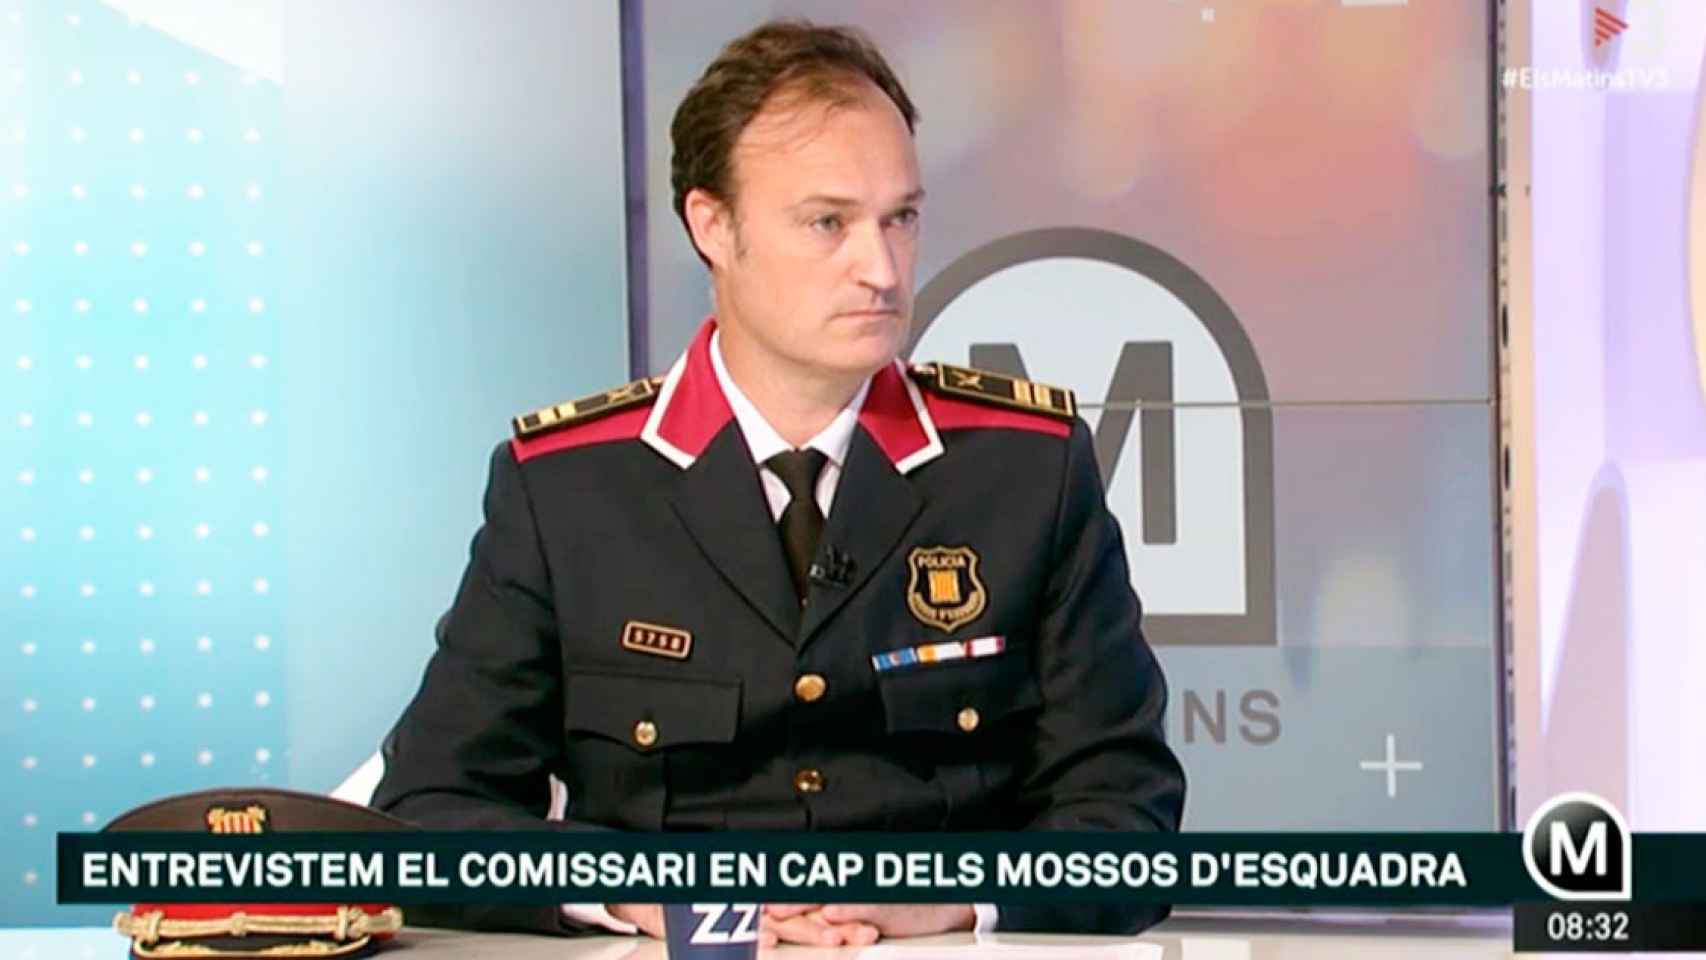 El comisario jefe de los Mossos d'Esquadra, Eduard Sallent, en TV3 / EP